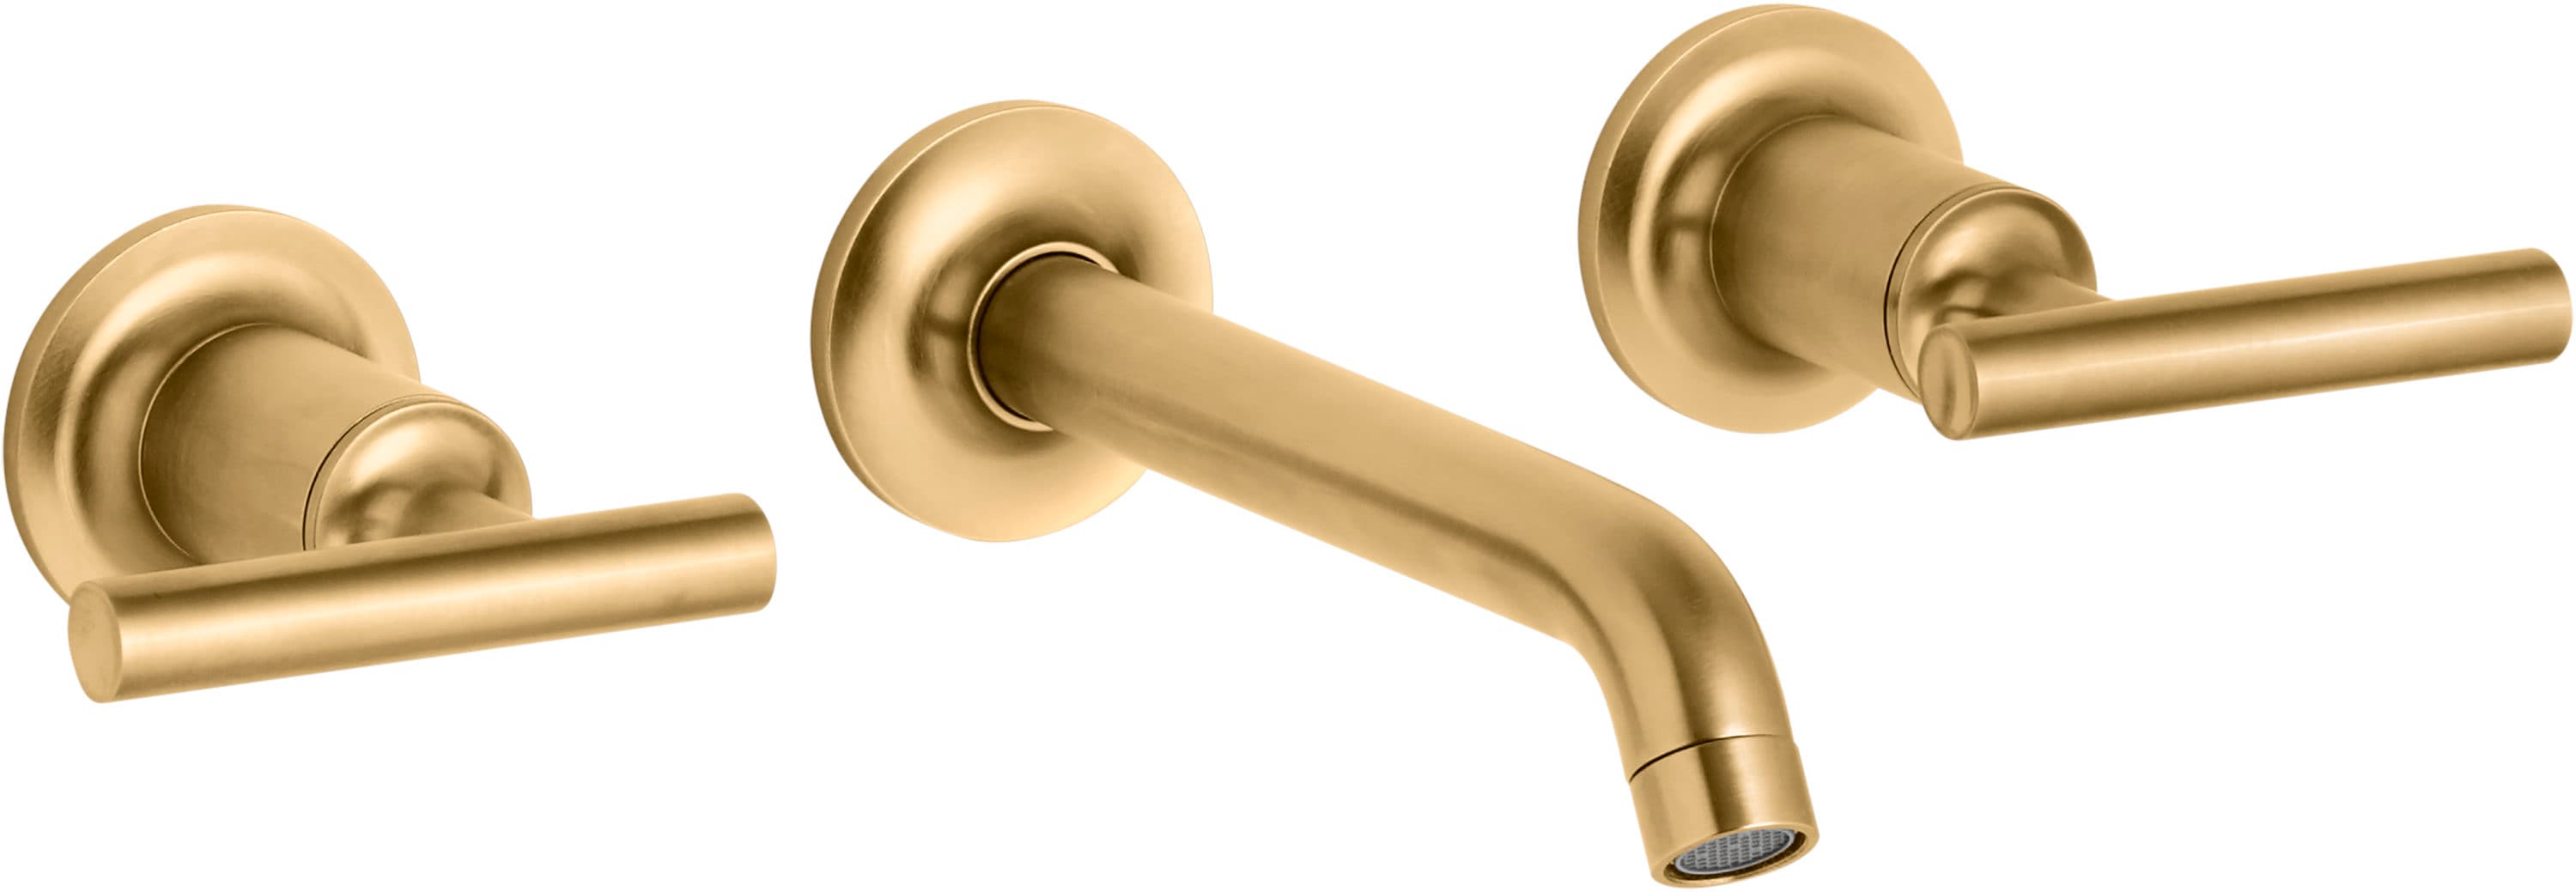 KOHLER Purist Vibrant Brushed Moderne Brass 2-handle Commercial/Residential  Wall-mount Bathtub Faucet